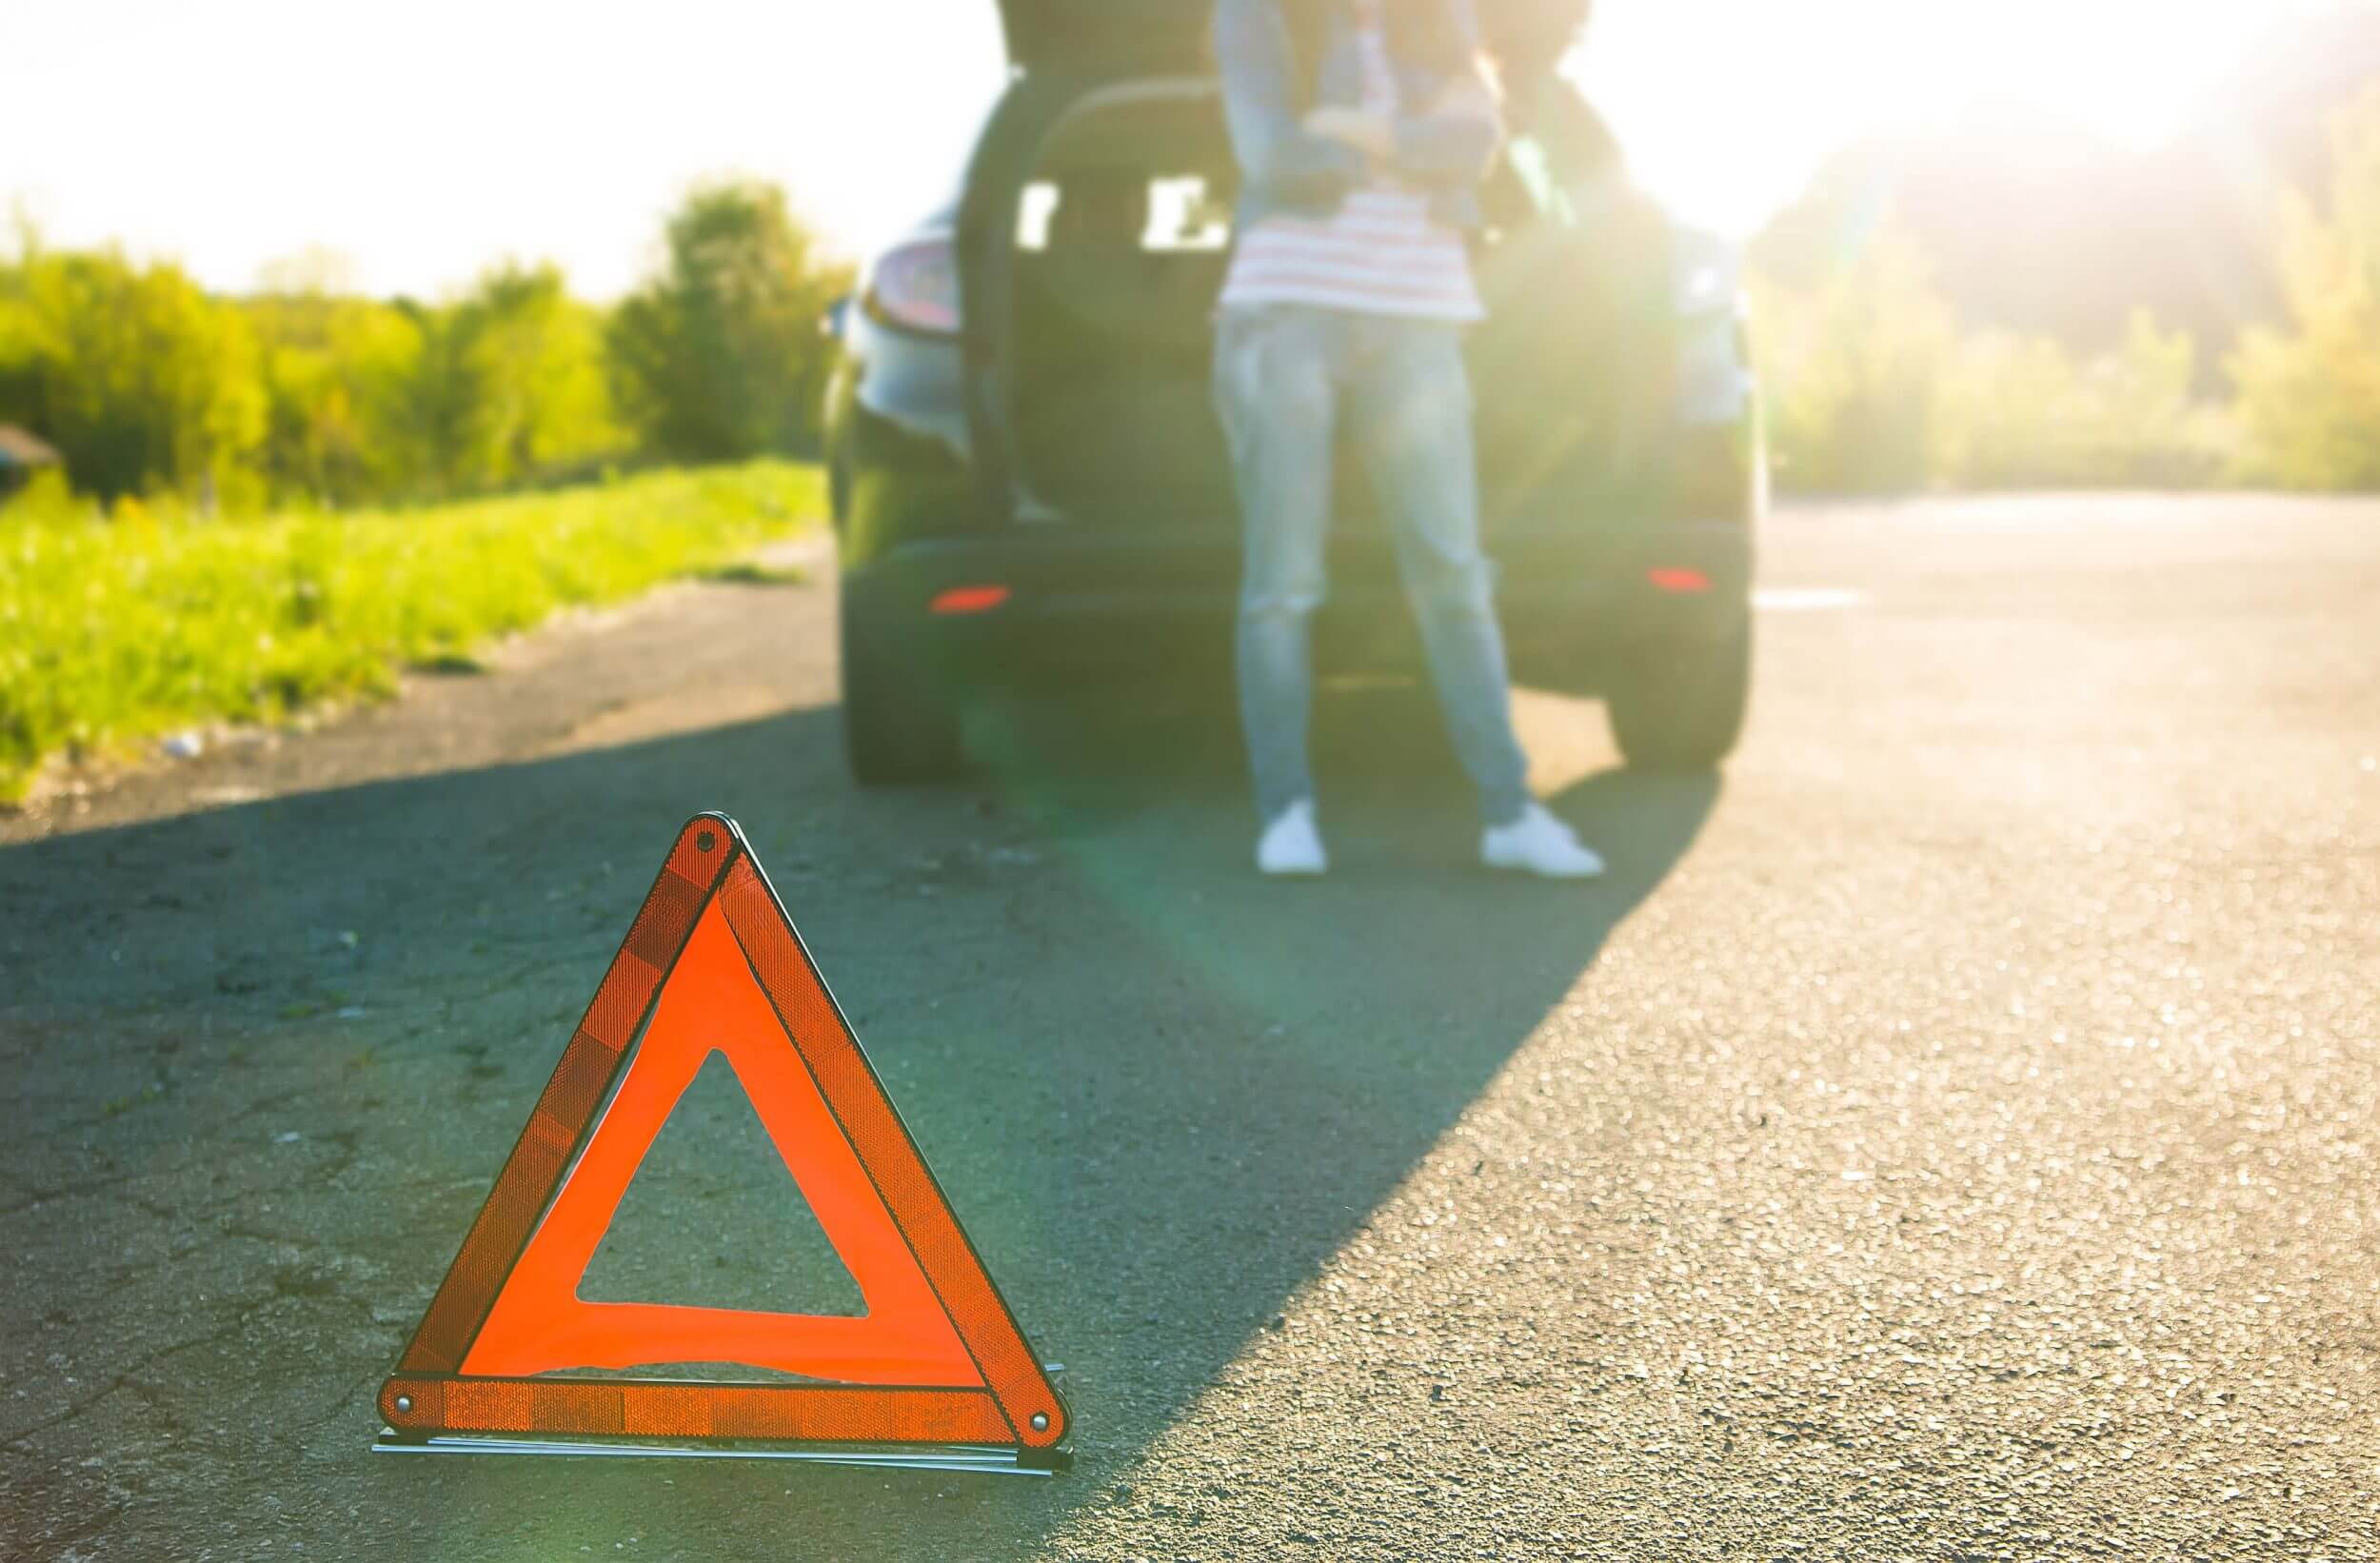 Warning triangle by brokendown car